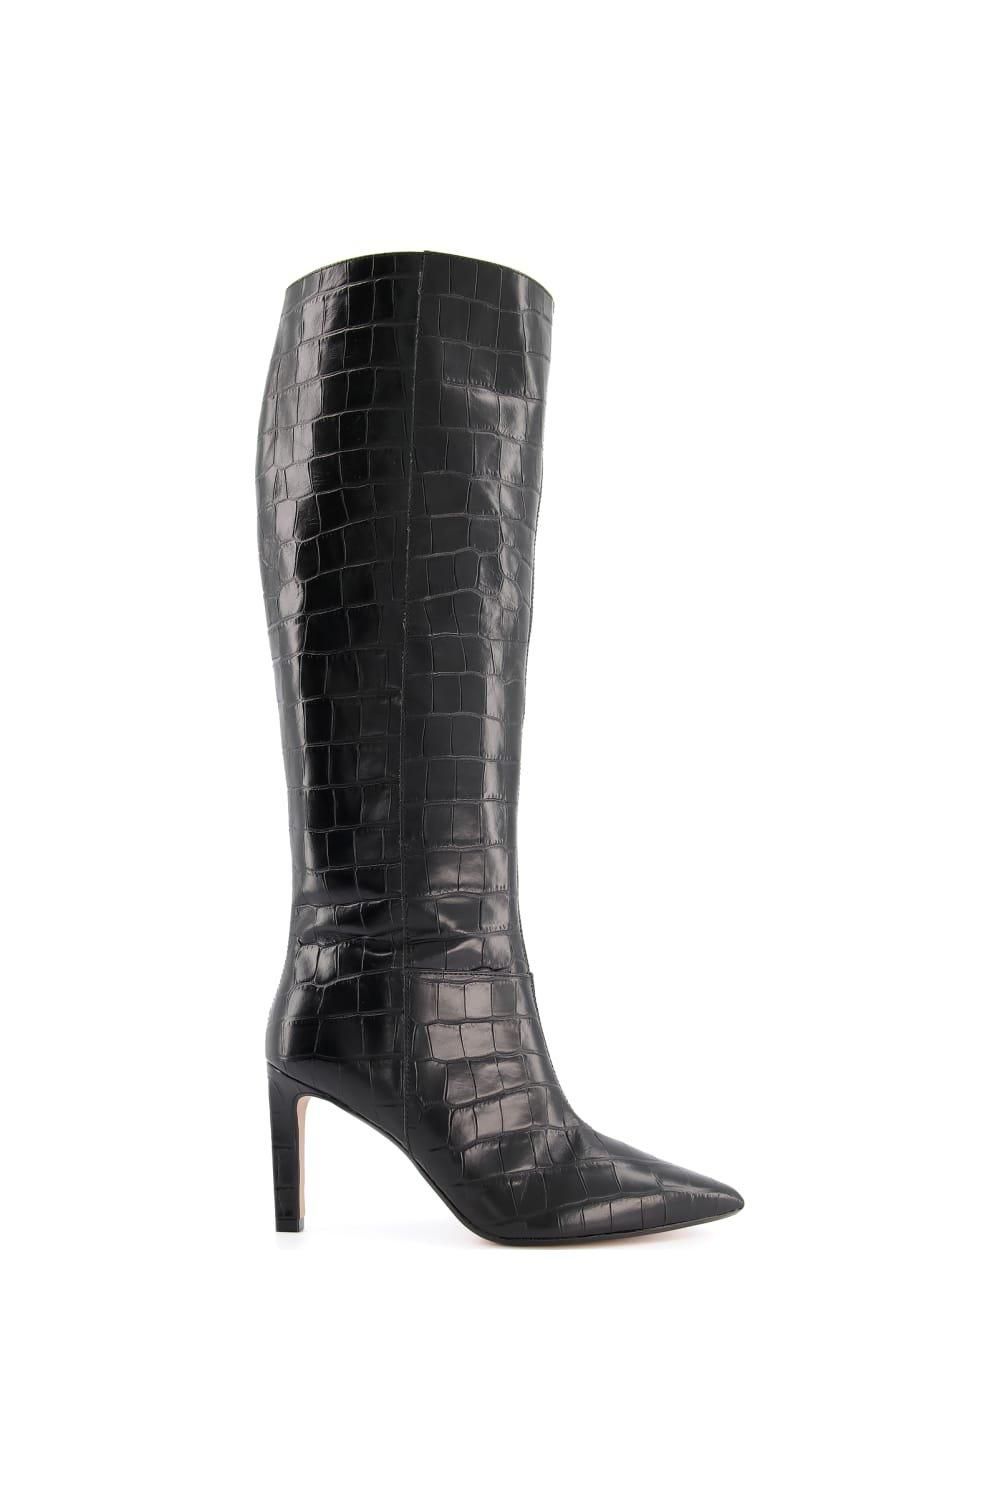 Boots | 'Spice' Leather Knee High Boots | Dune London | Debenhams UK